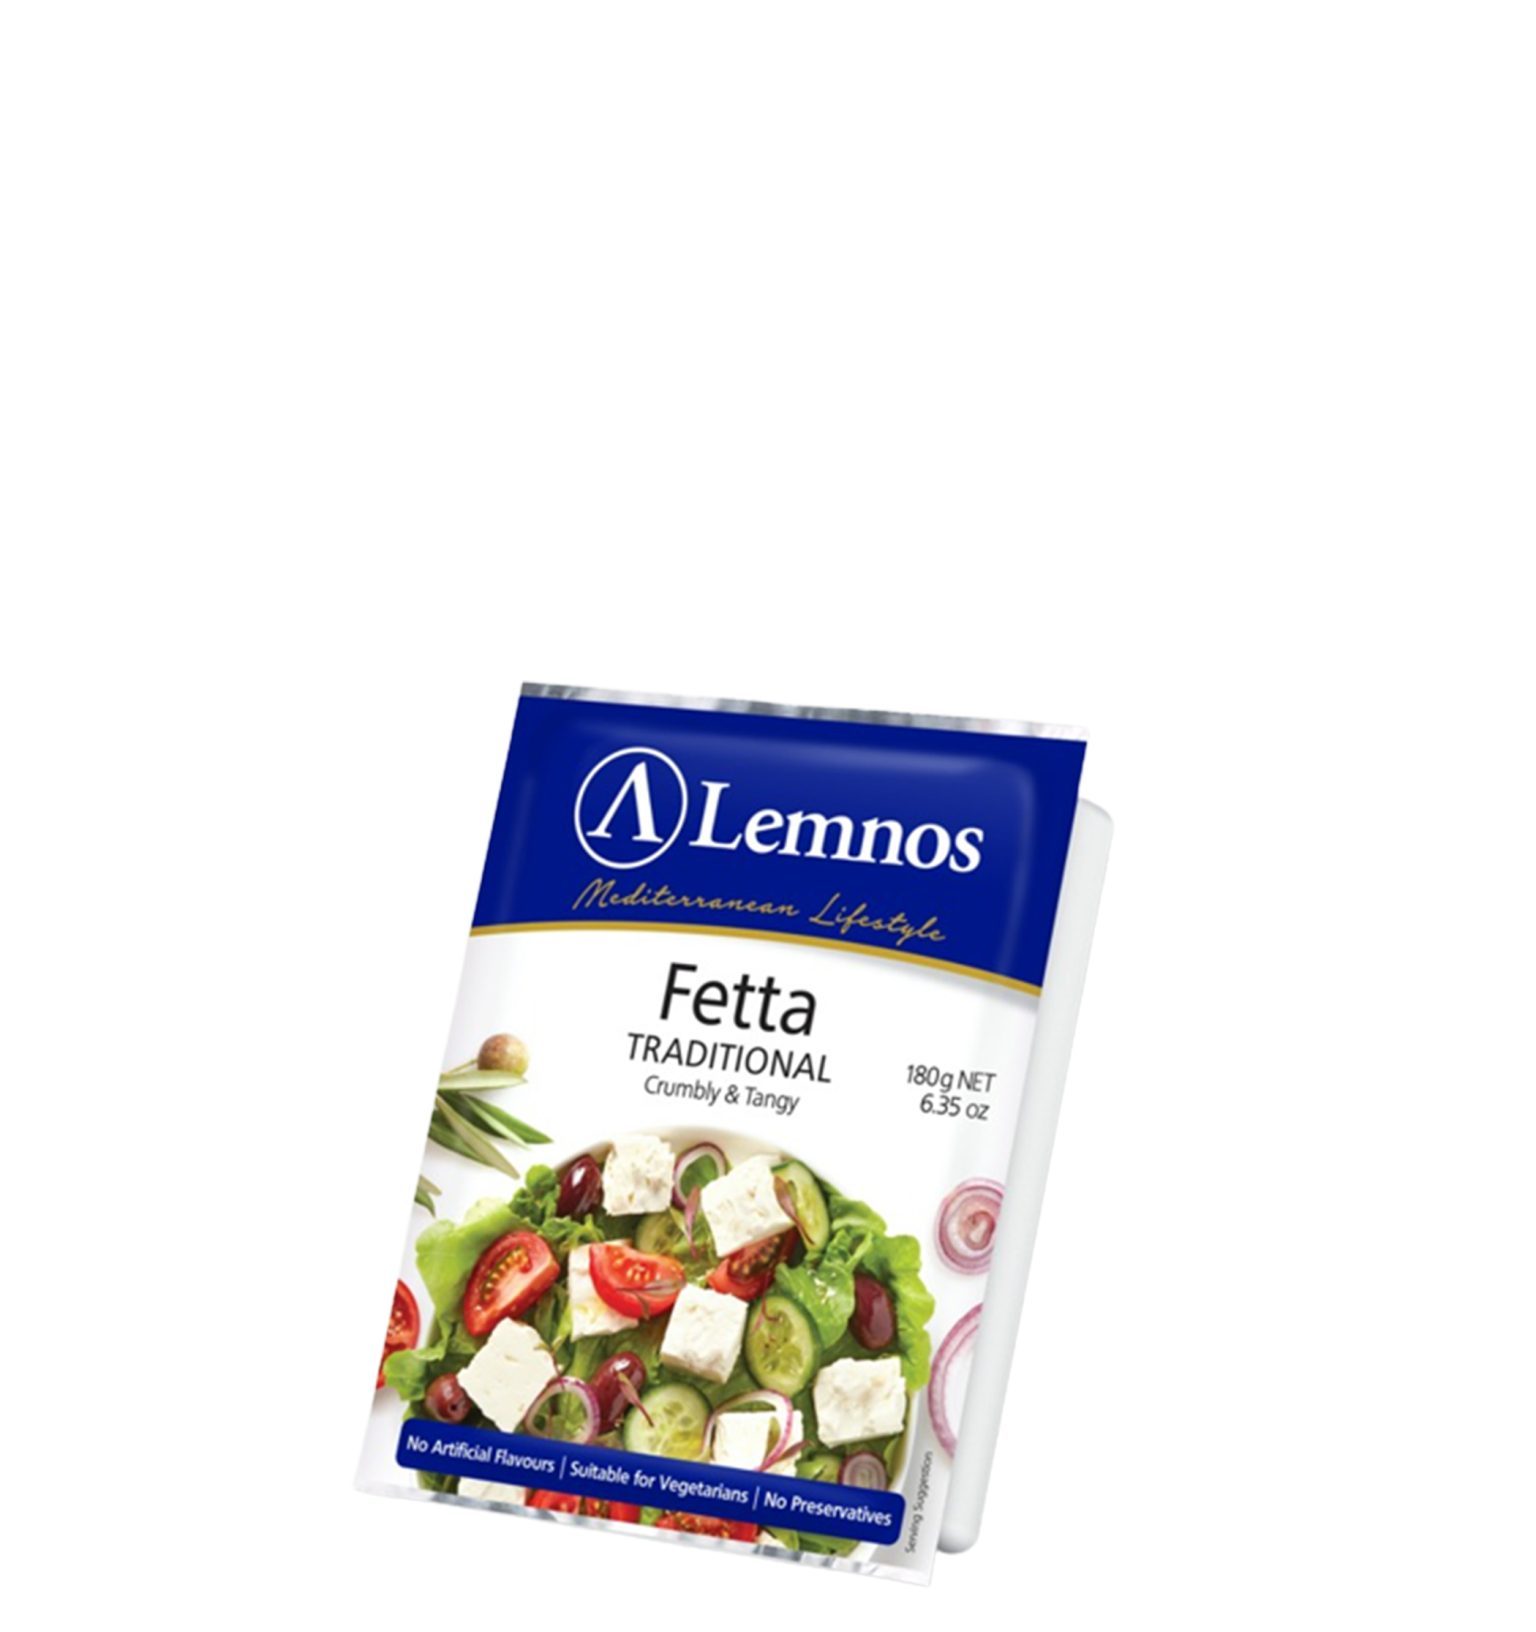 Lemnos Regular Full Cream Fetta 180g main image